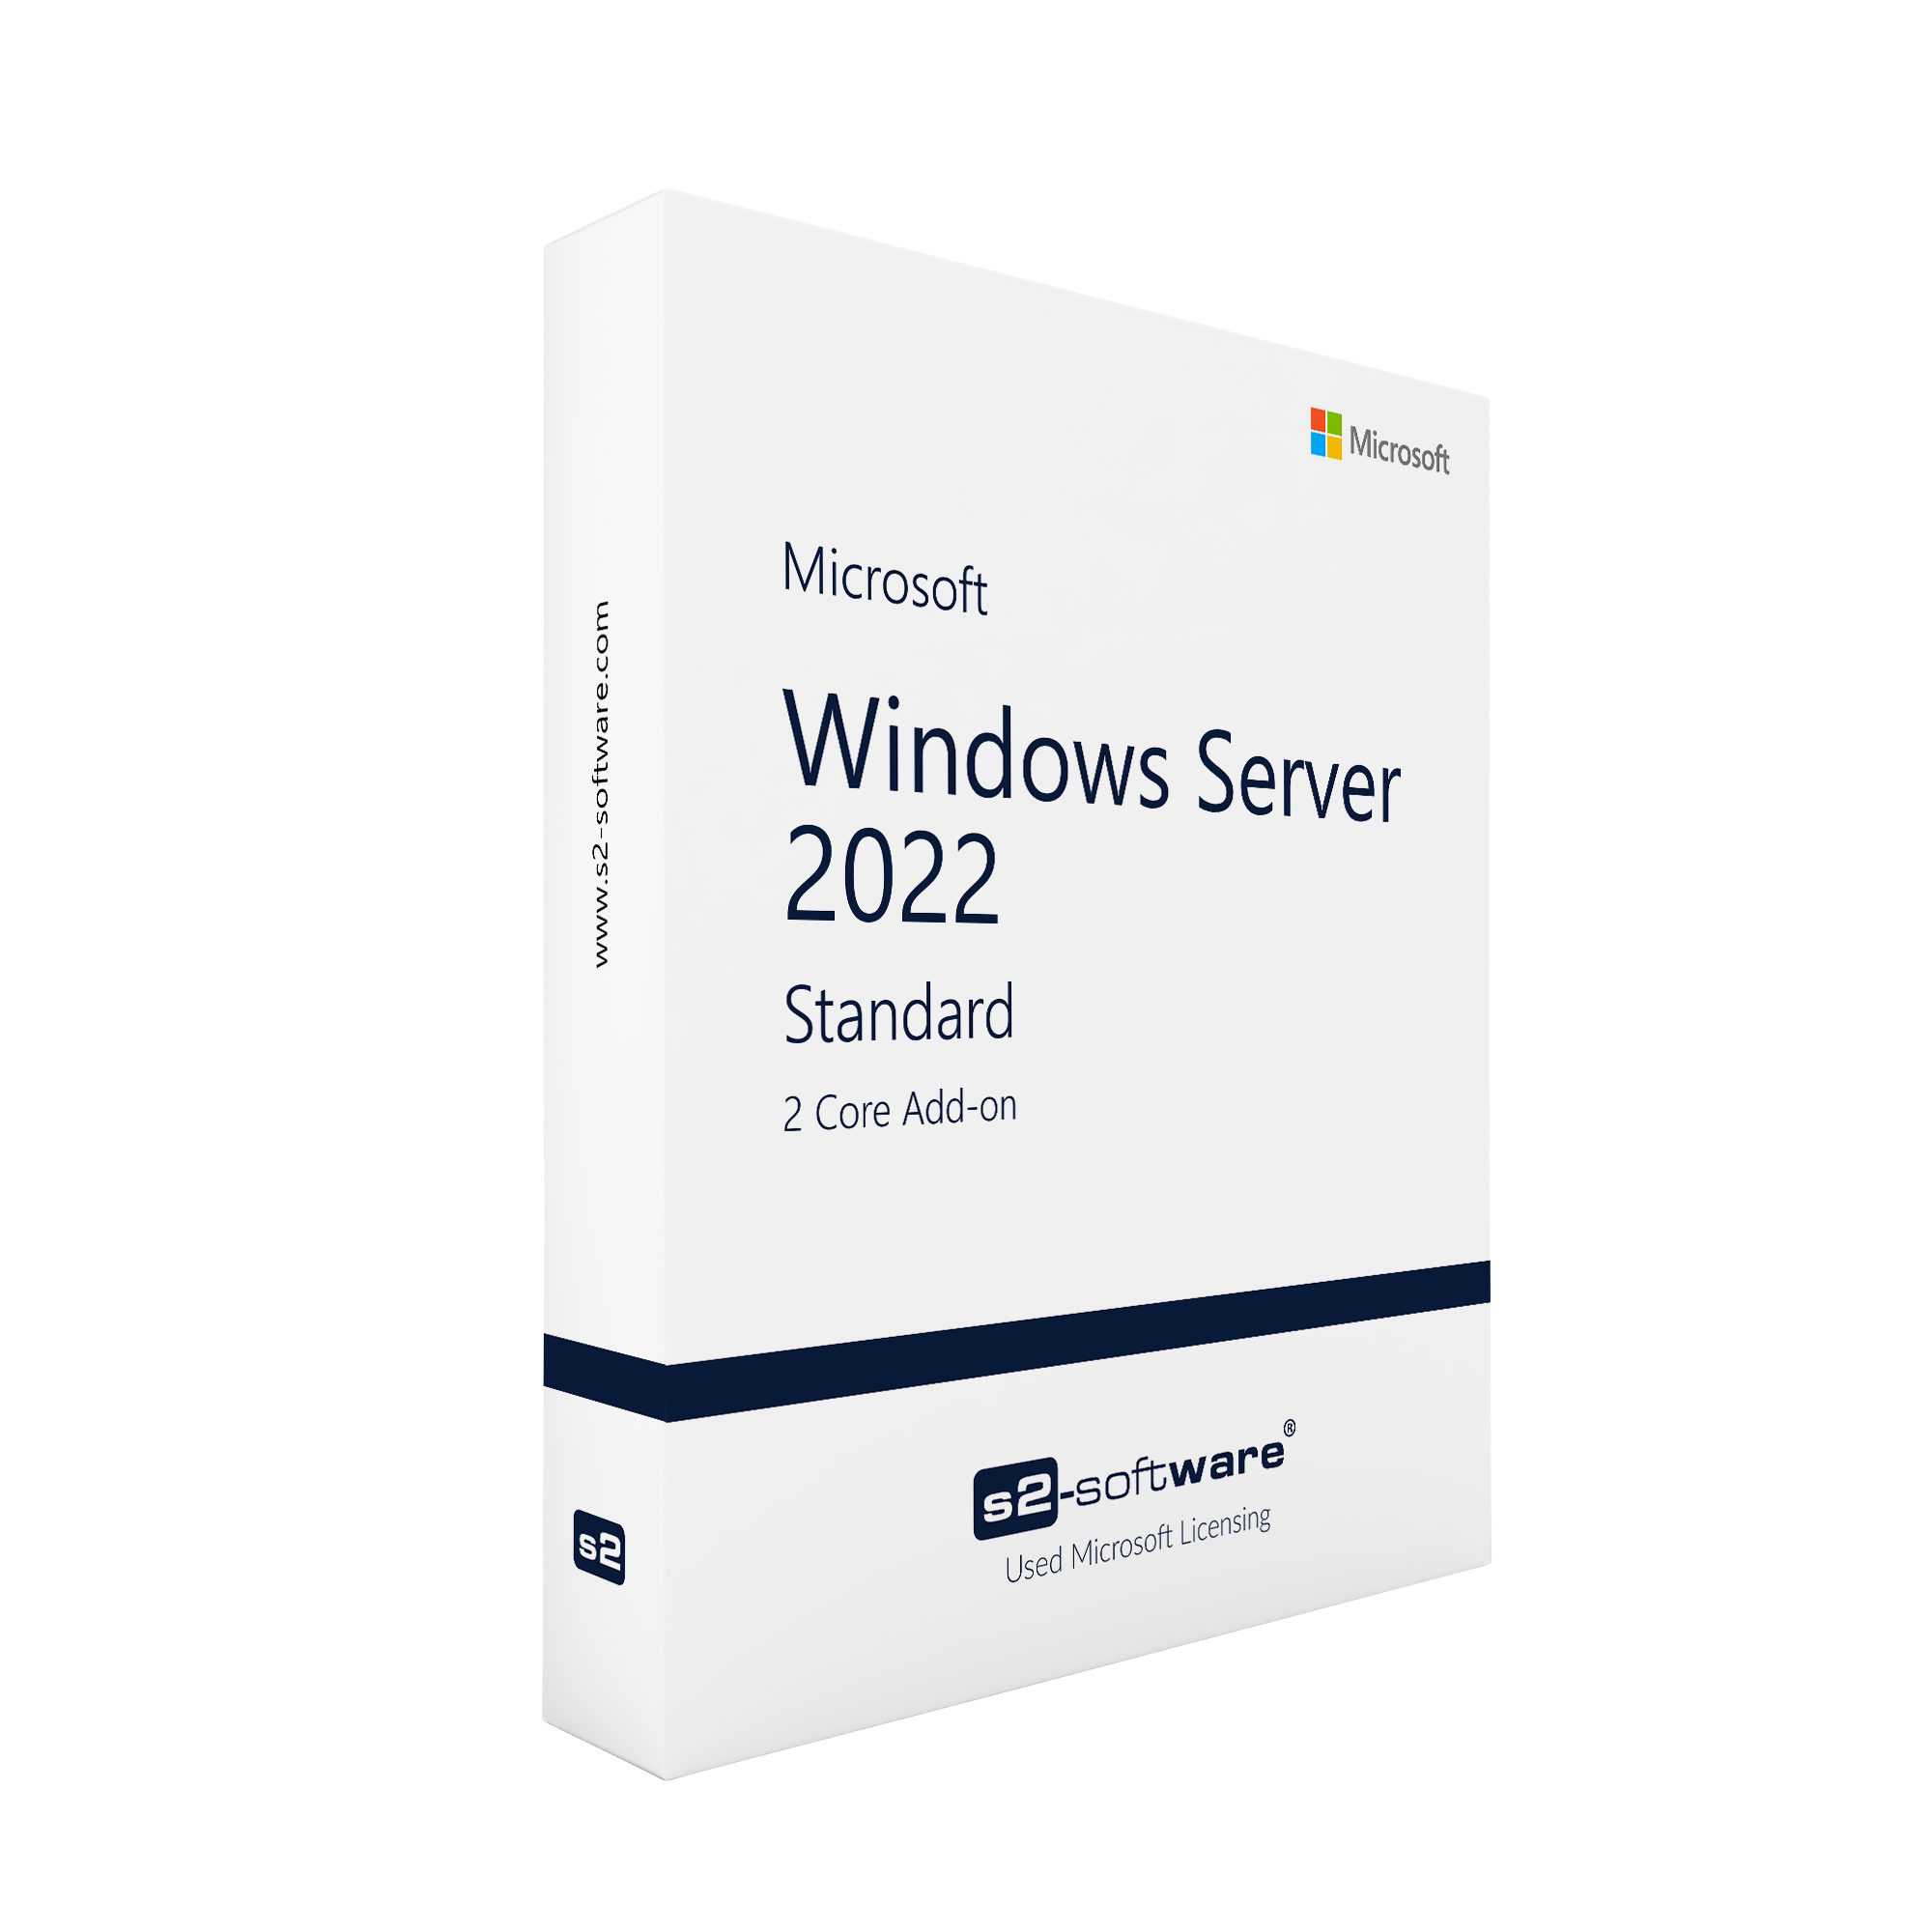 Windows Server 2022 Standard 2 Core Add-on